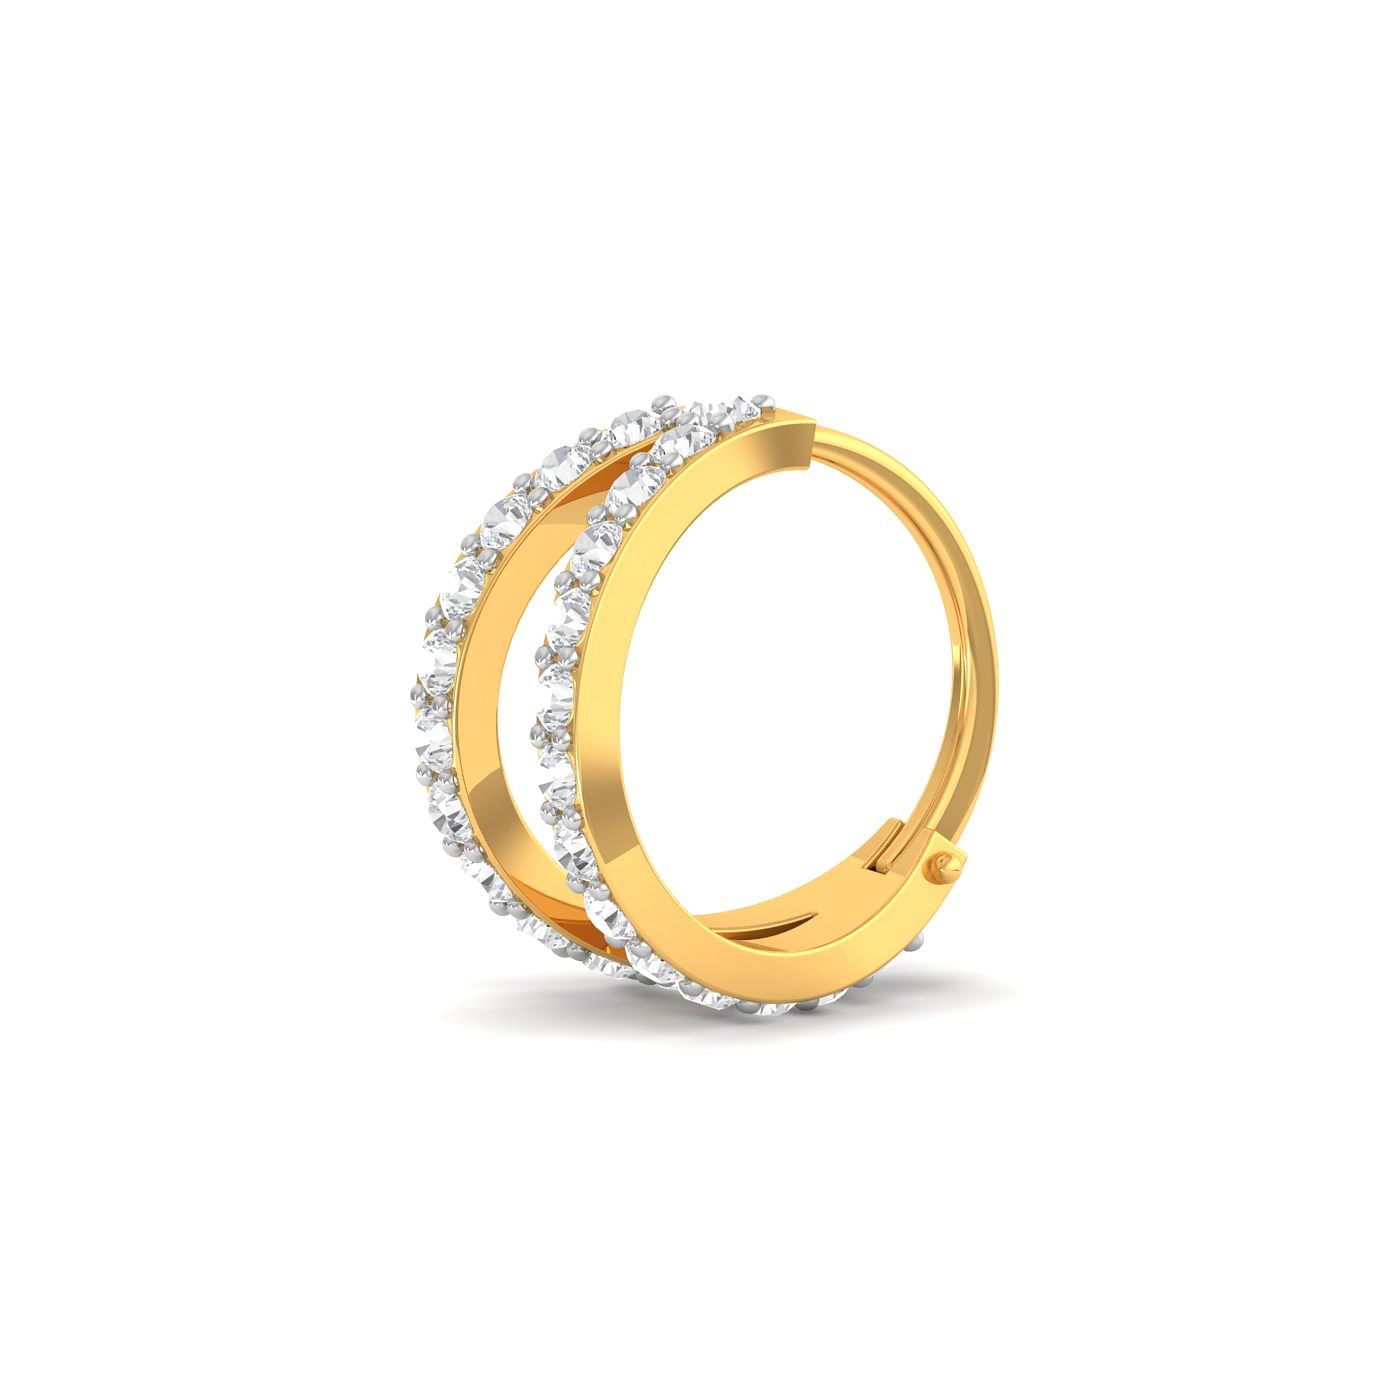 Designer Diamond Nose Ring Manufacturer Supplier from Mumbai India